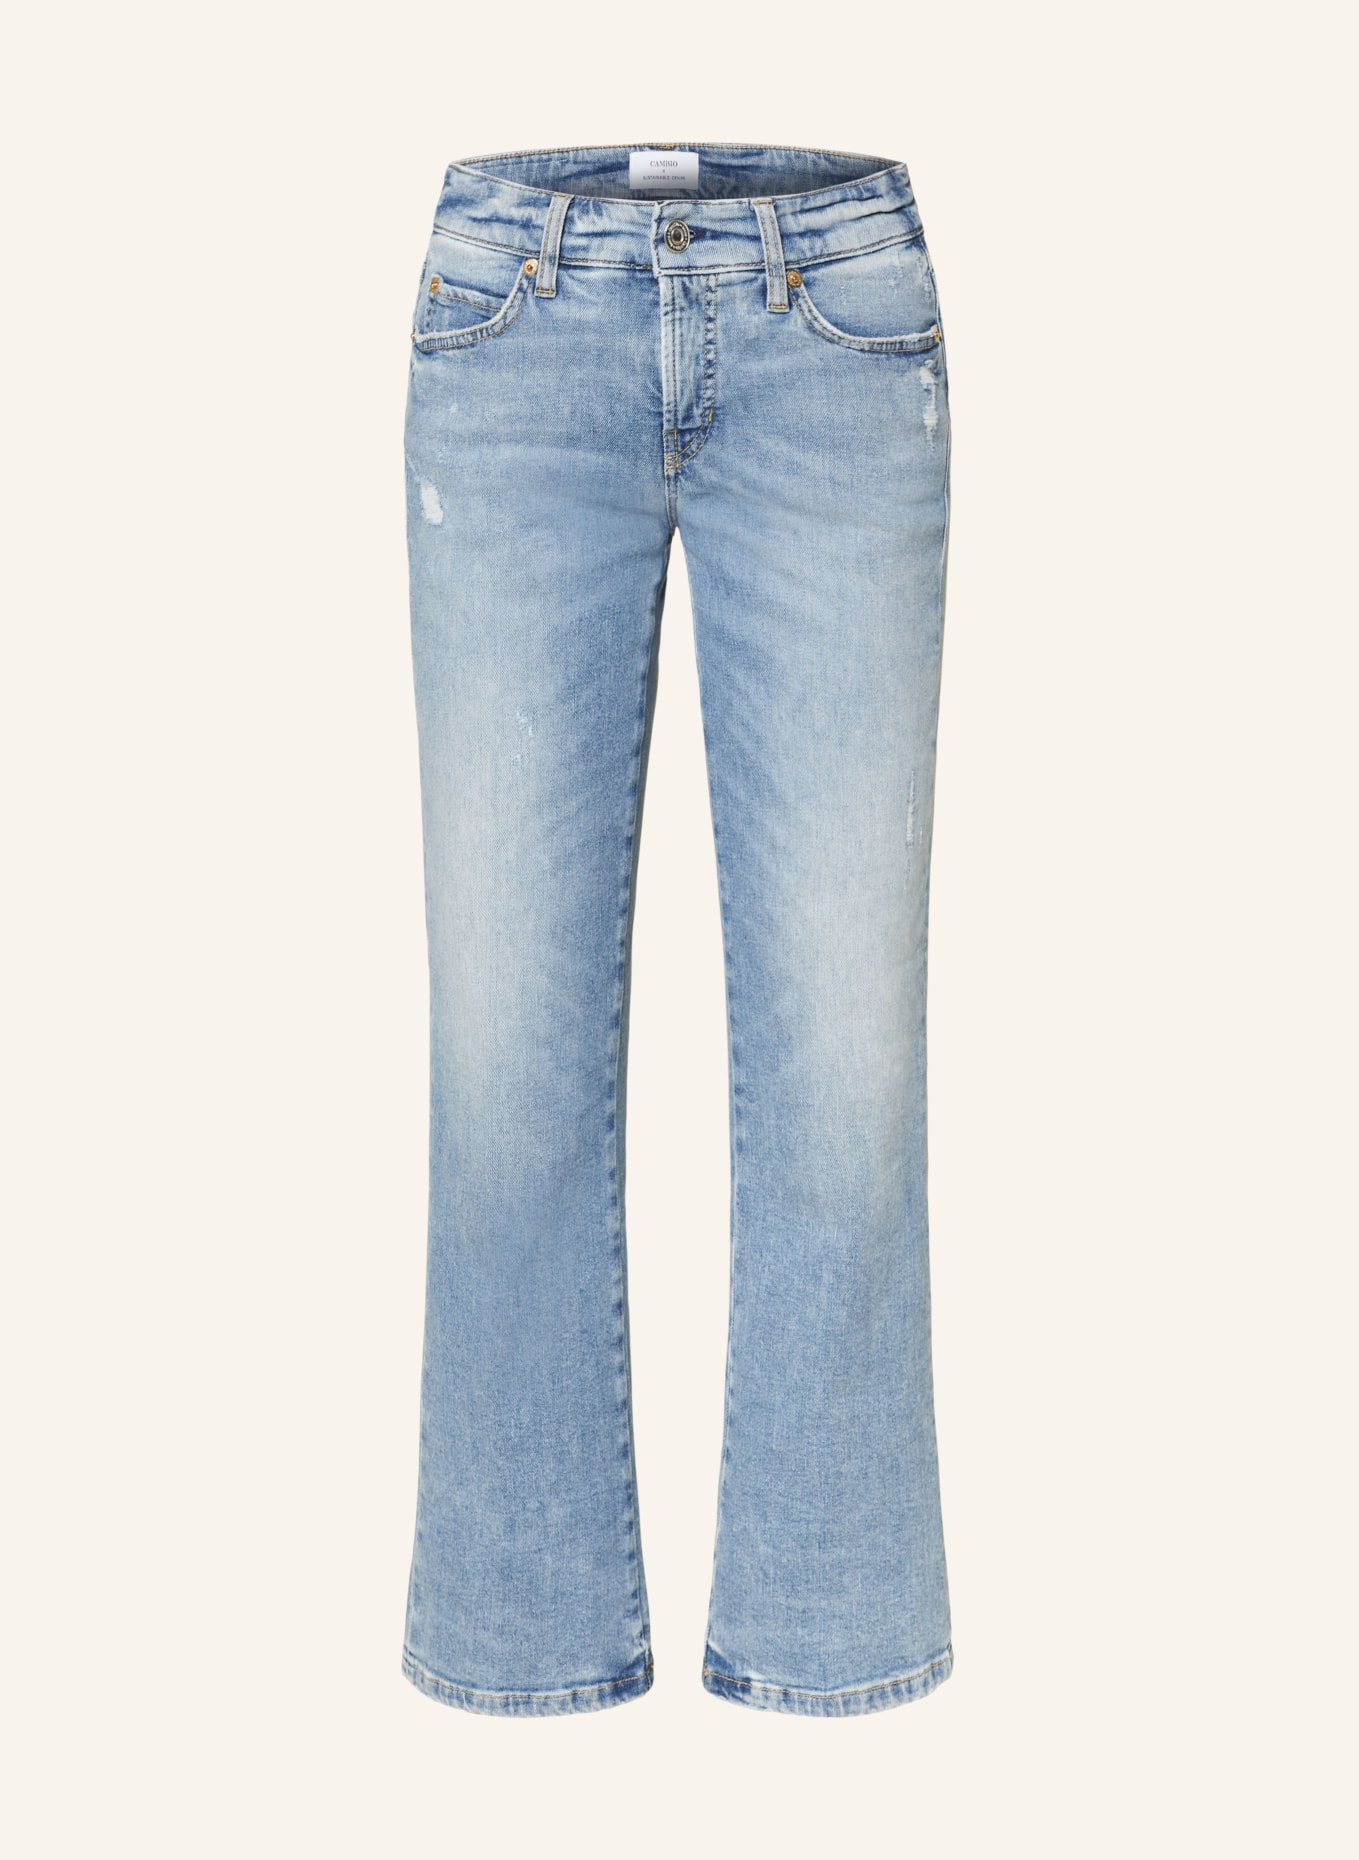 CAMBIO Jeans FRANCESCA, Farbe: 5237 authentic hemp well worn (Bild 1)